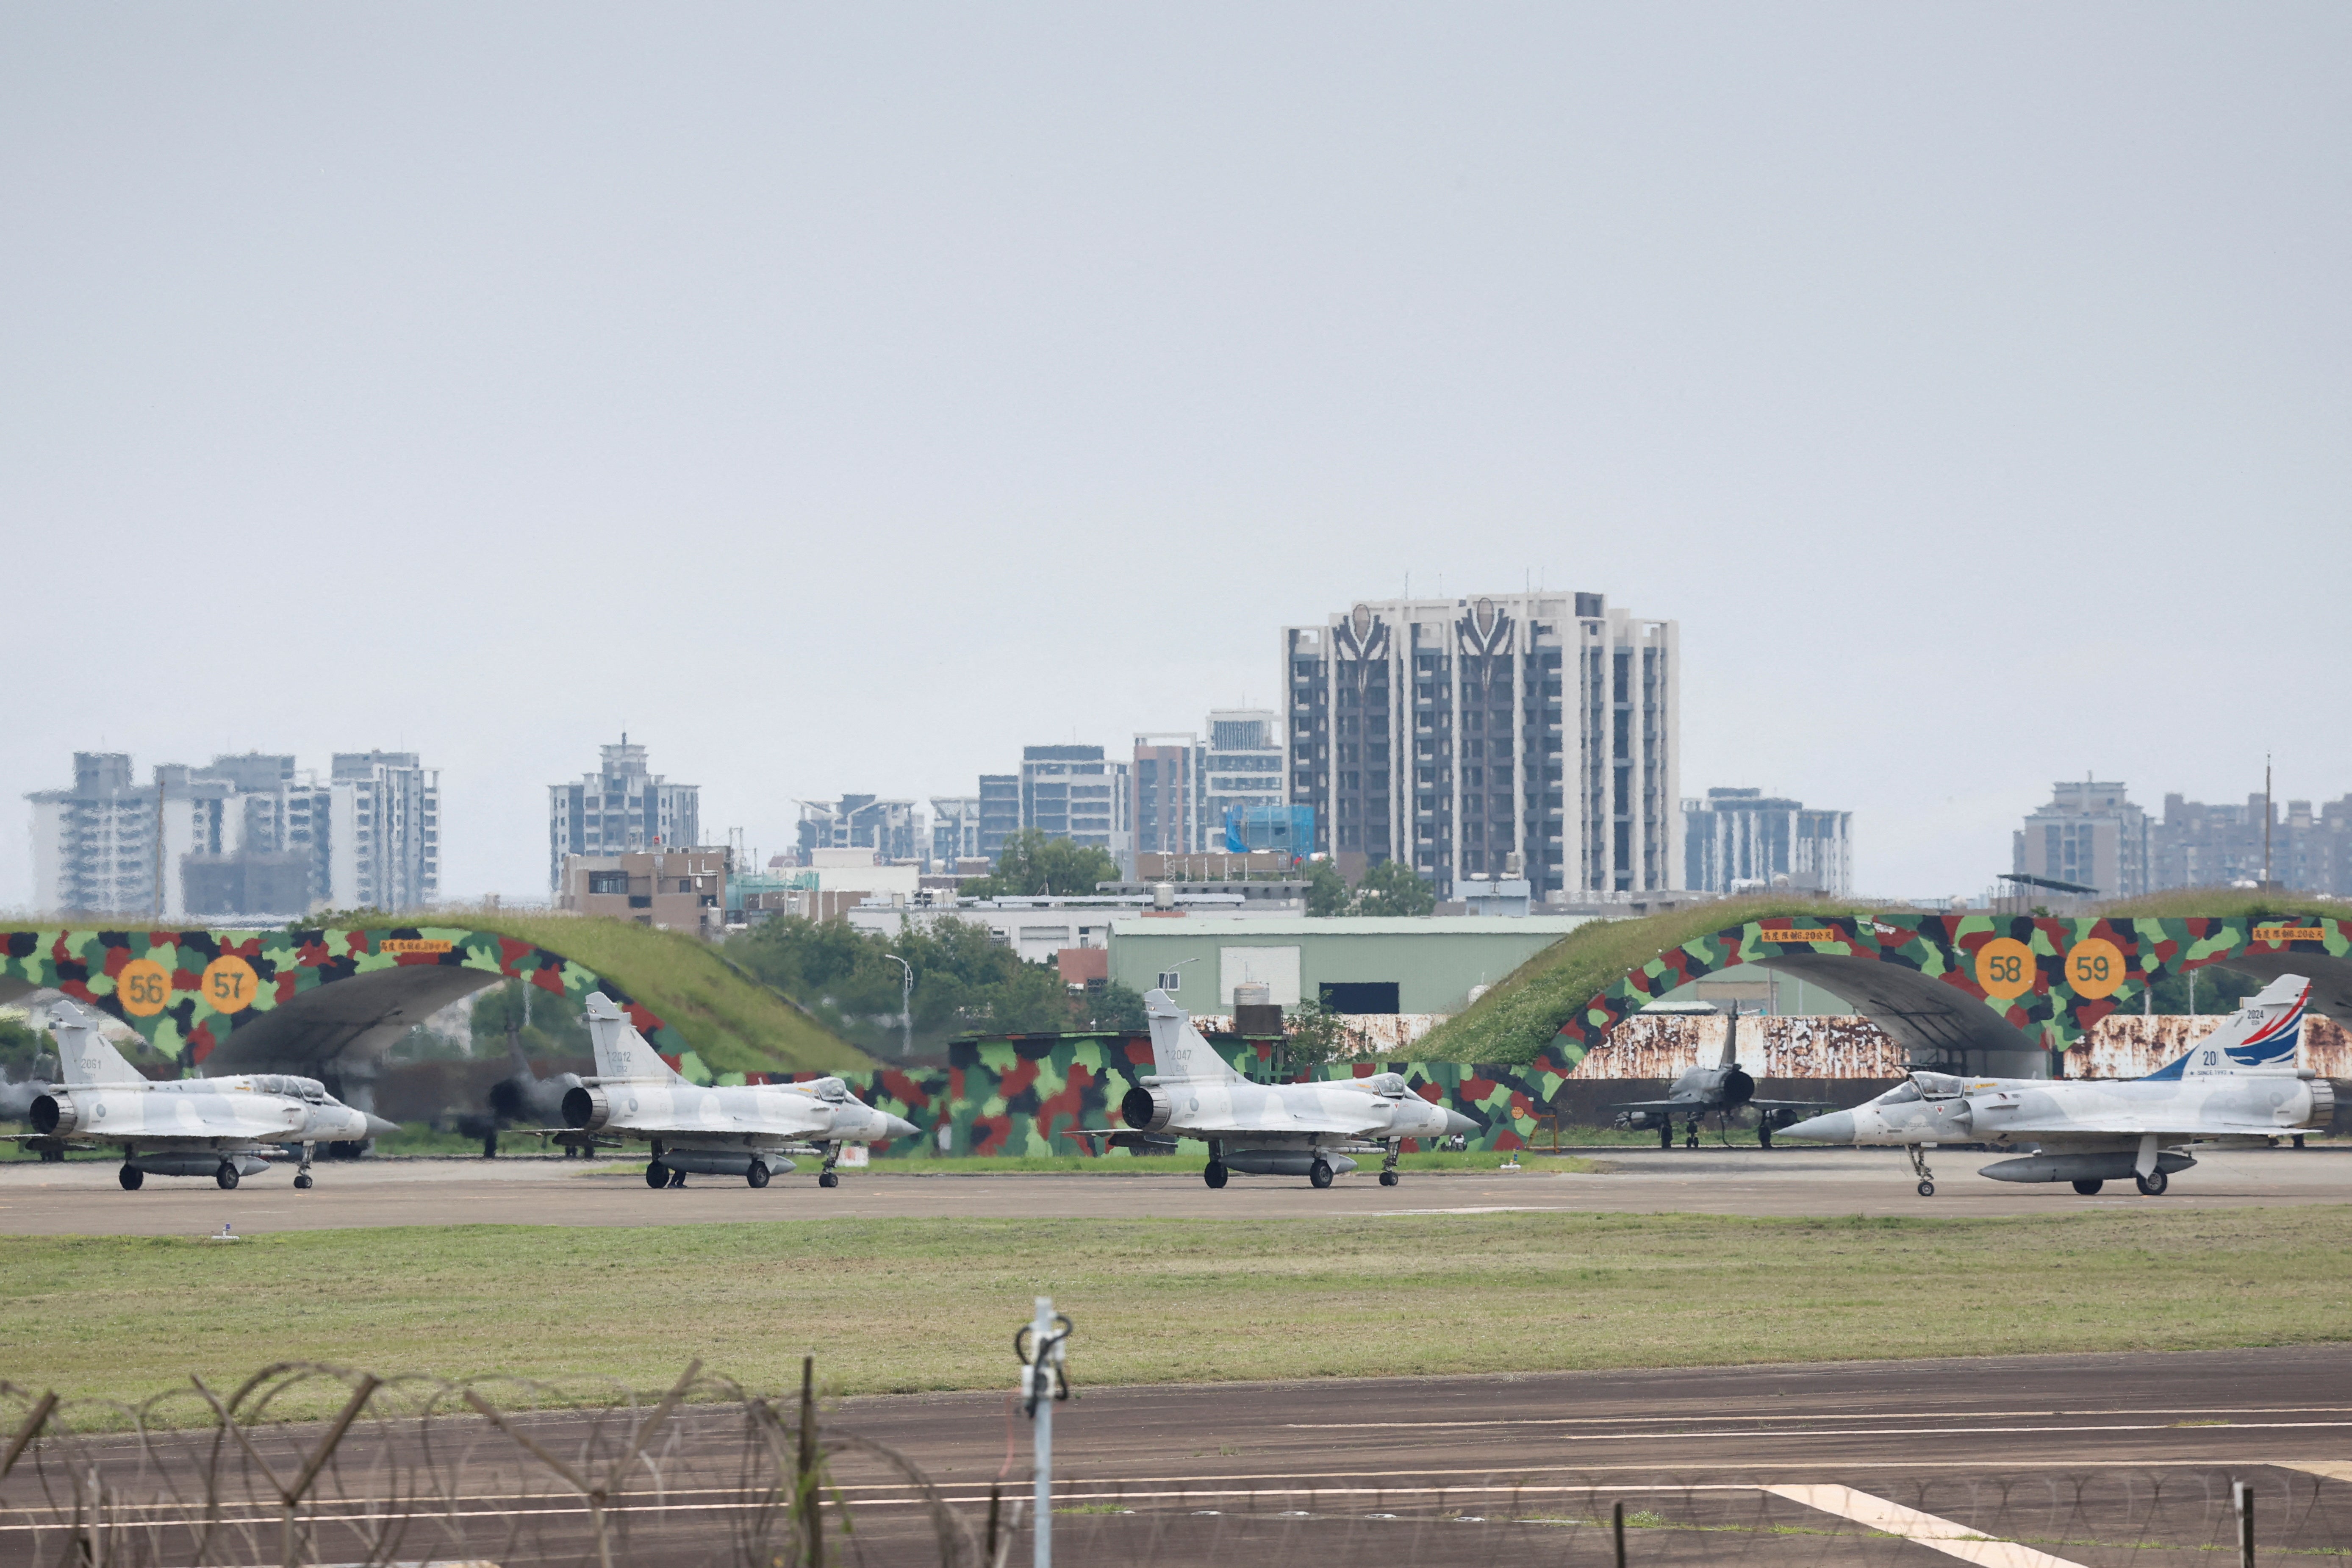 Mirage 2000-5 aircraft prepare to take off at Hsinchu air base in Taiwan